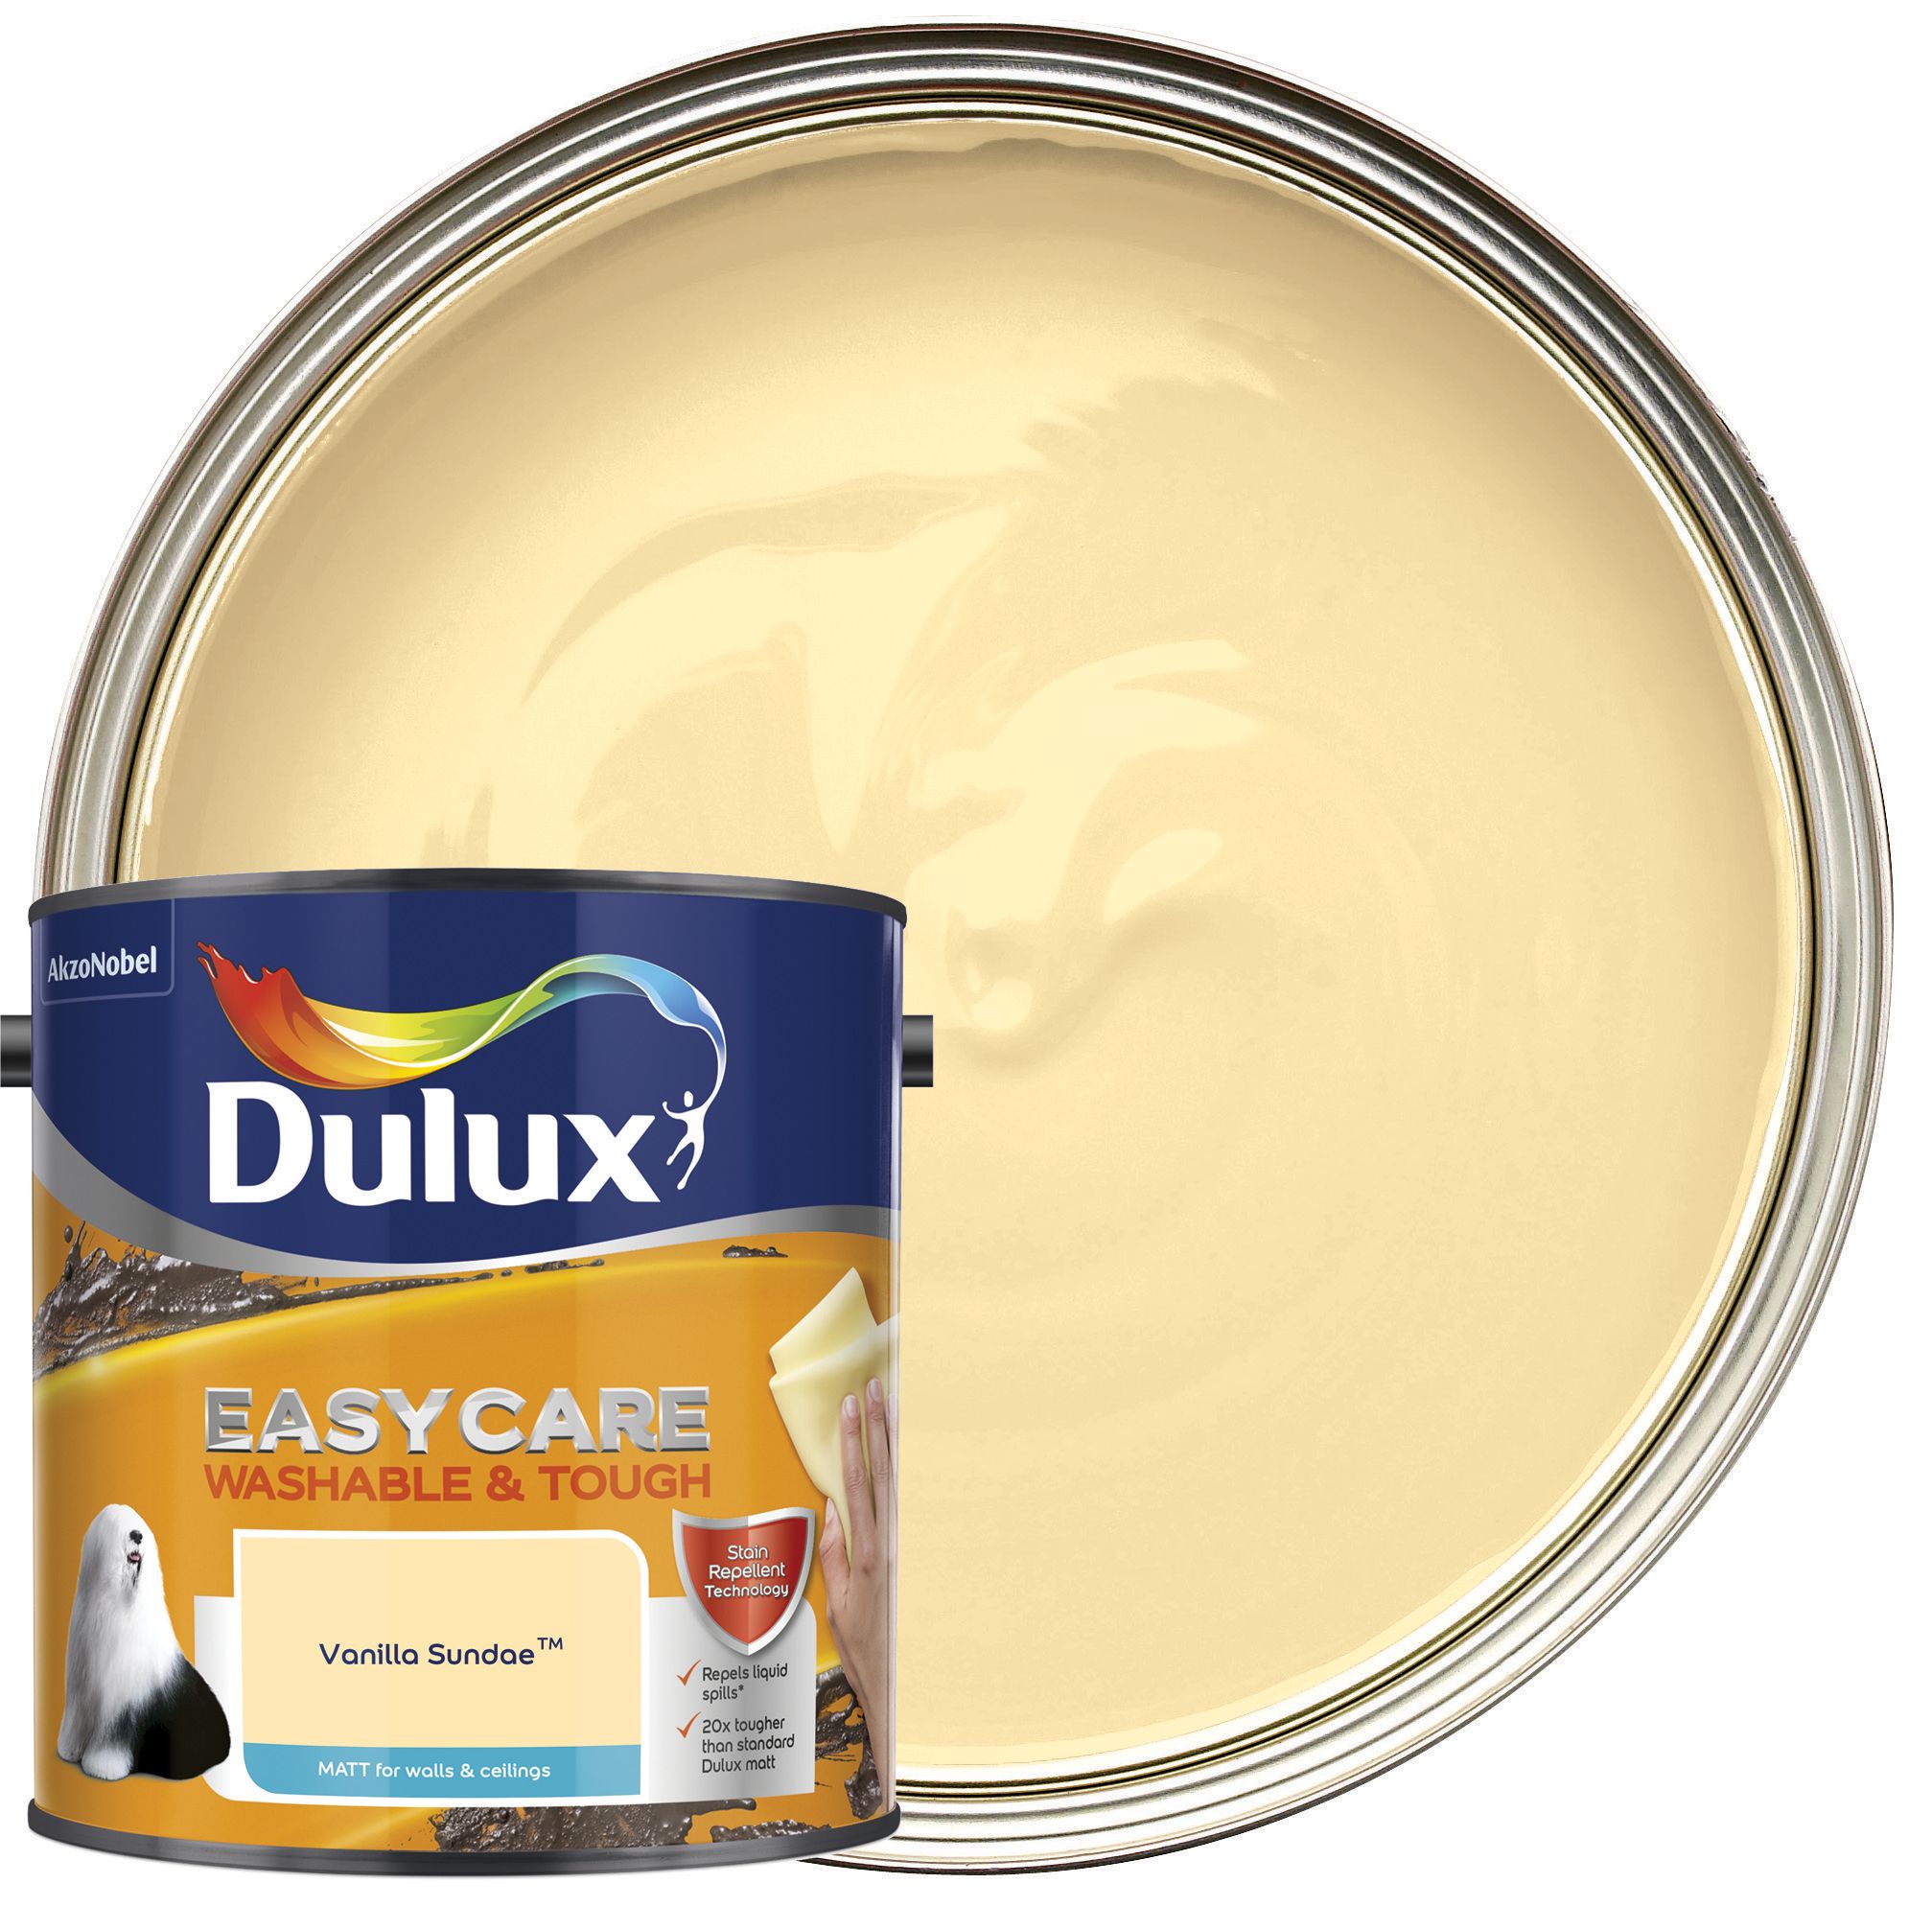 Image of Dulux Easycare Washable & Tough Matt Emulsion Paint - Vanilla Sundae - 2.5L